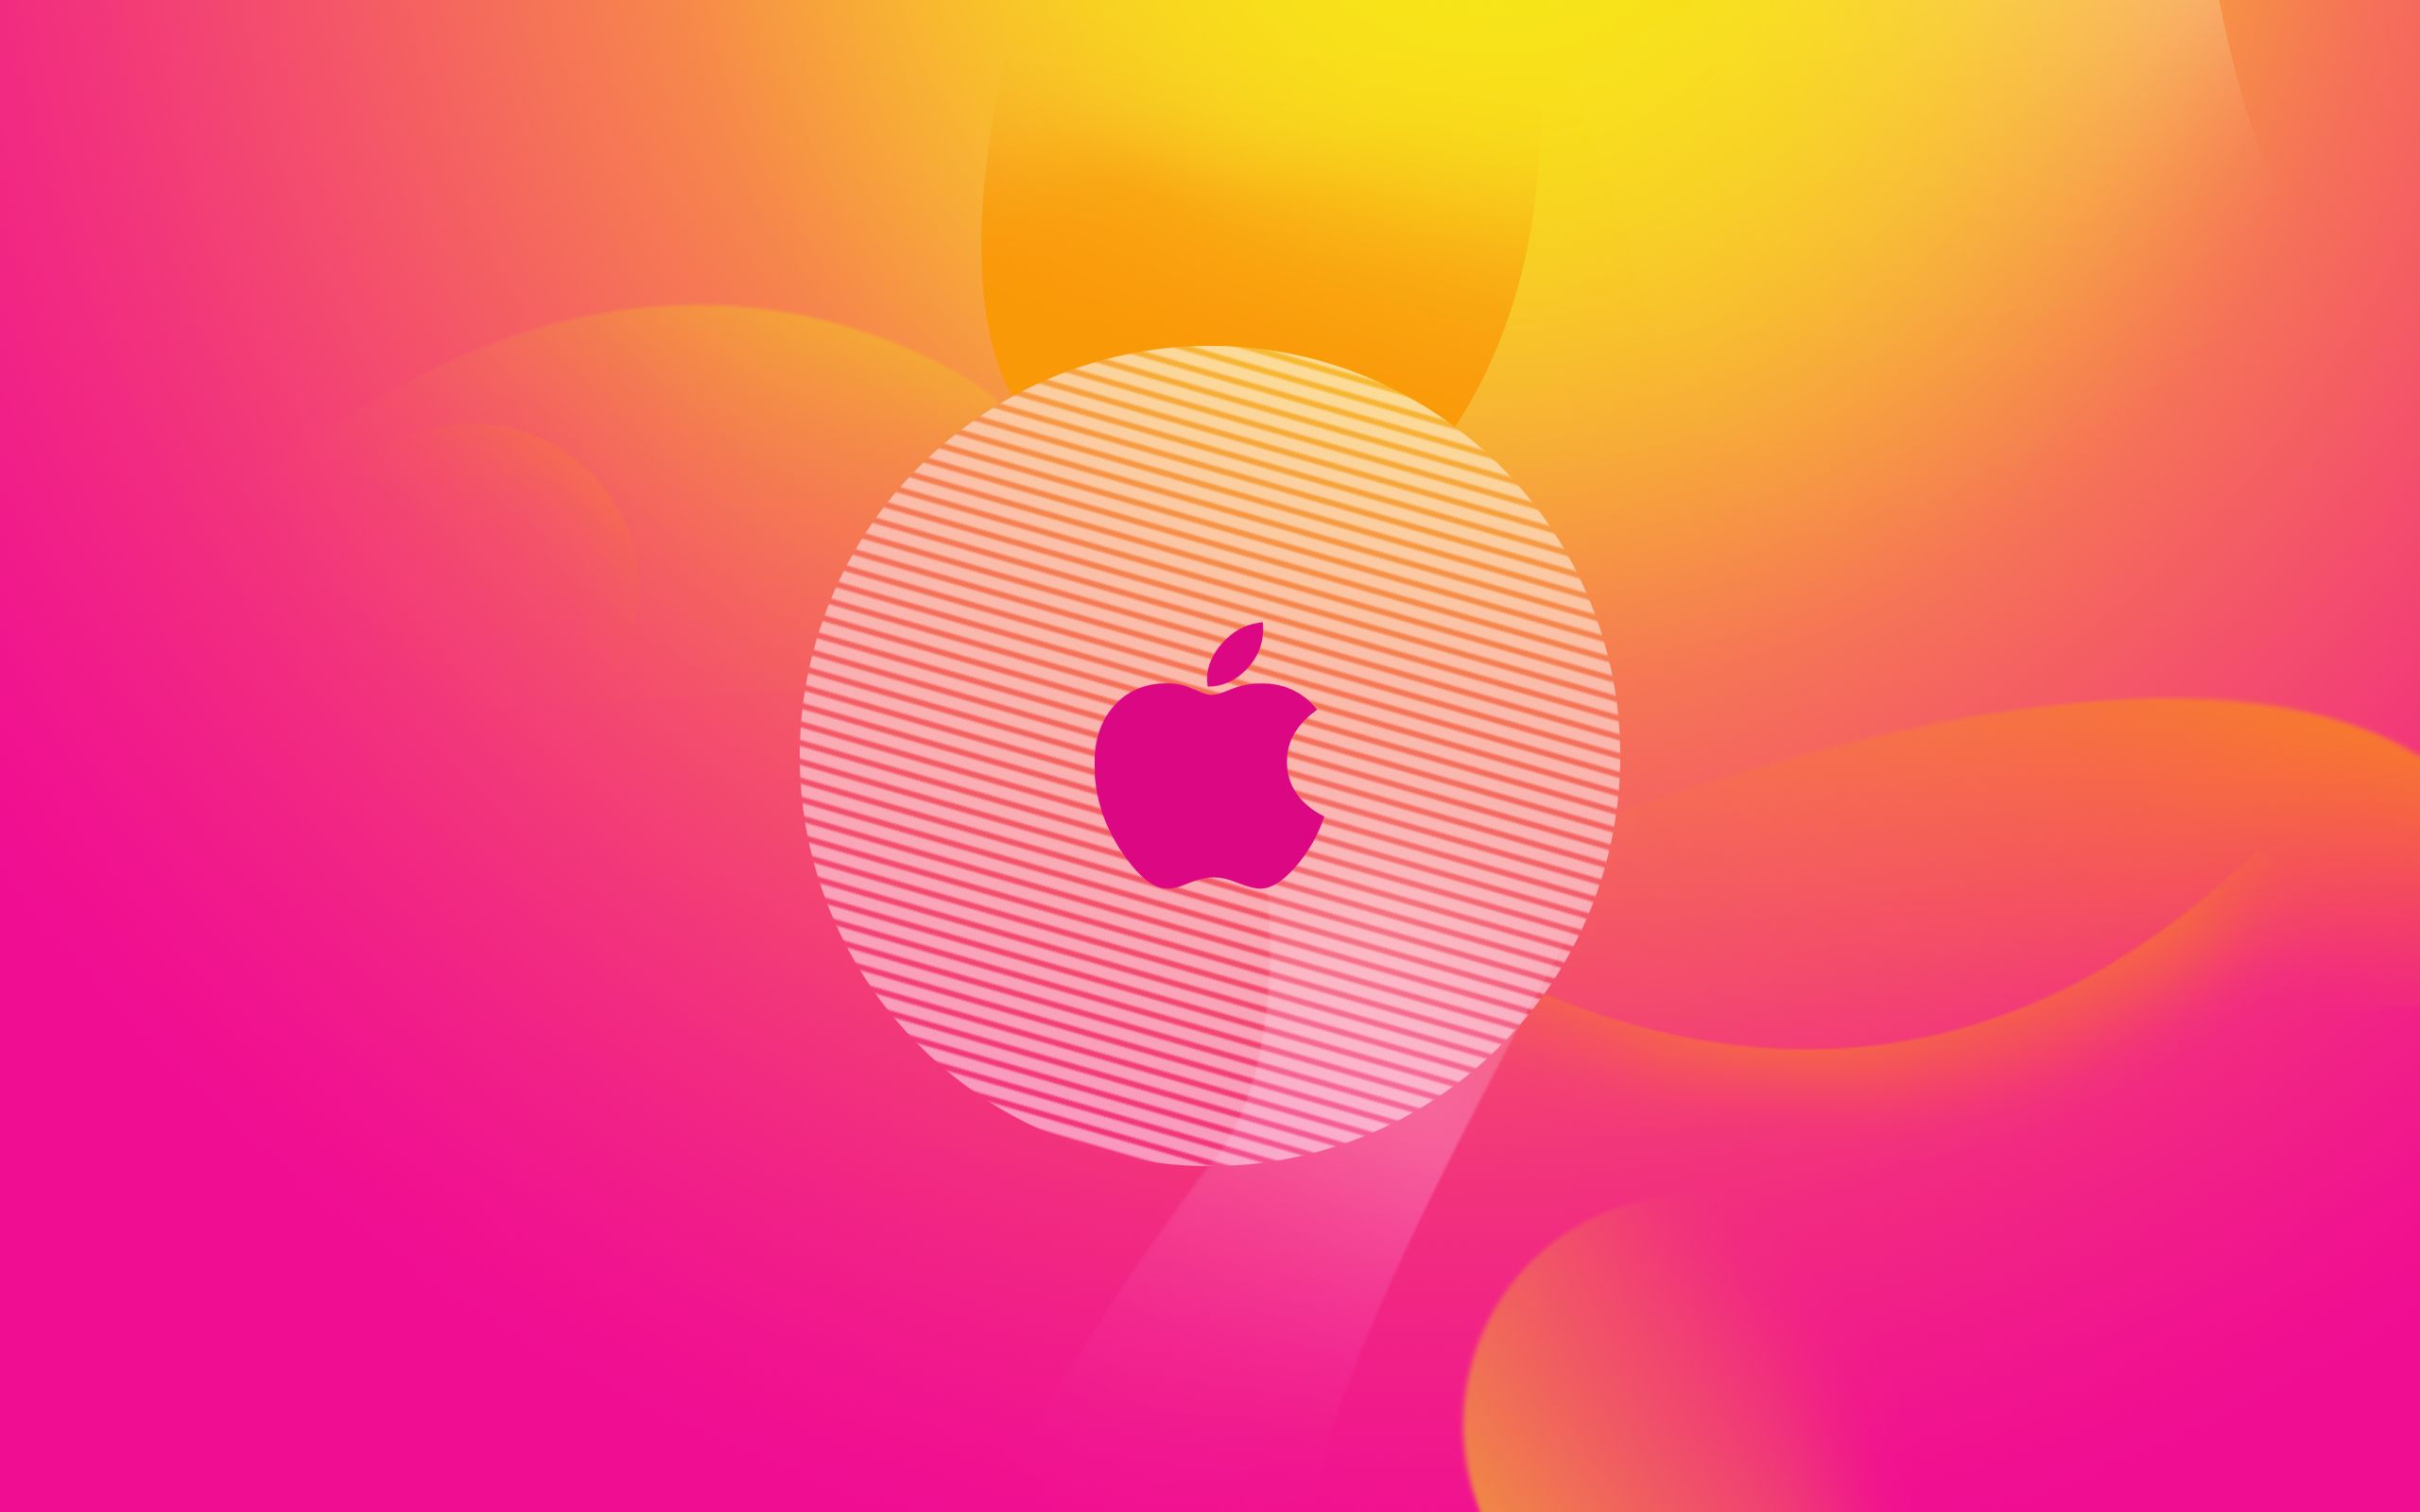 Abstract Apple Apple Inc Digital Art Pink Yellow 2560x1600